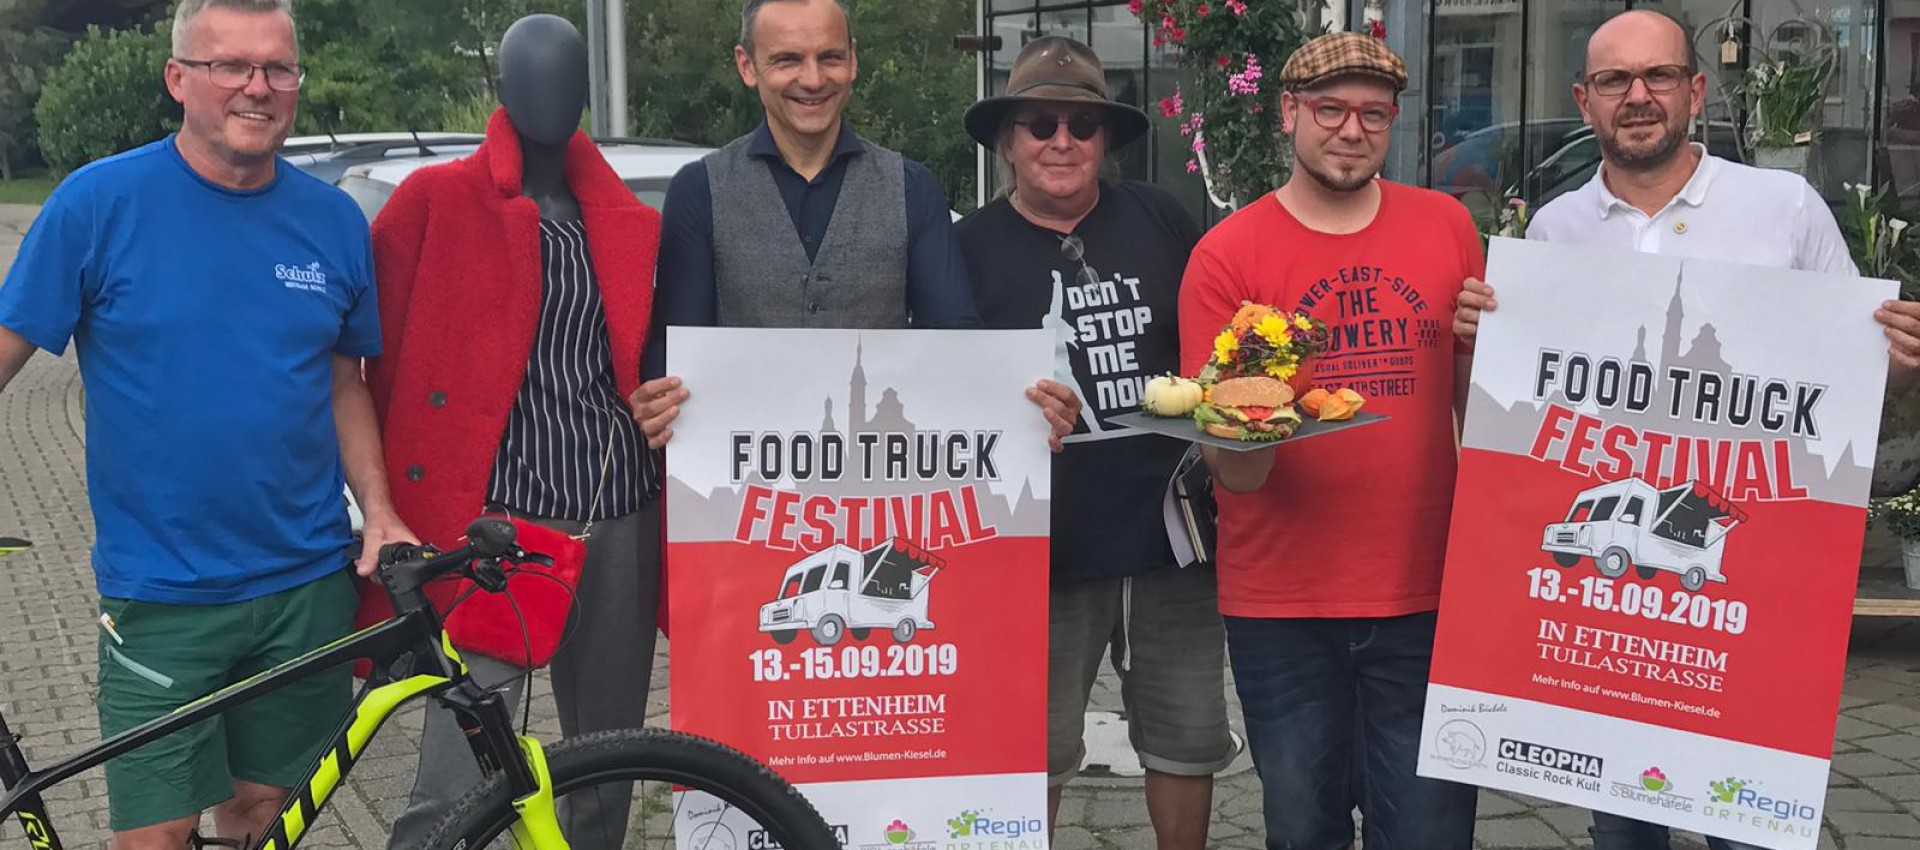 Pressekonferenz zum Food Truck Festival in Ettenheim